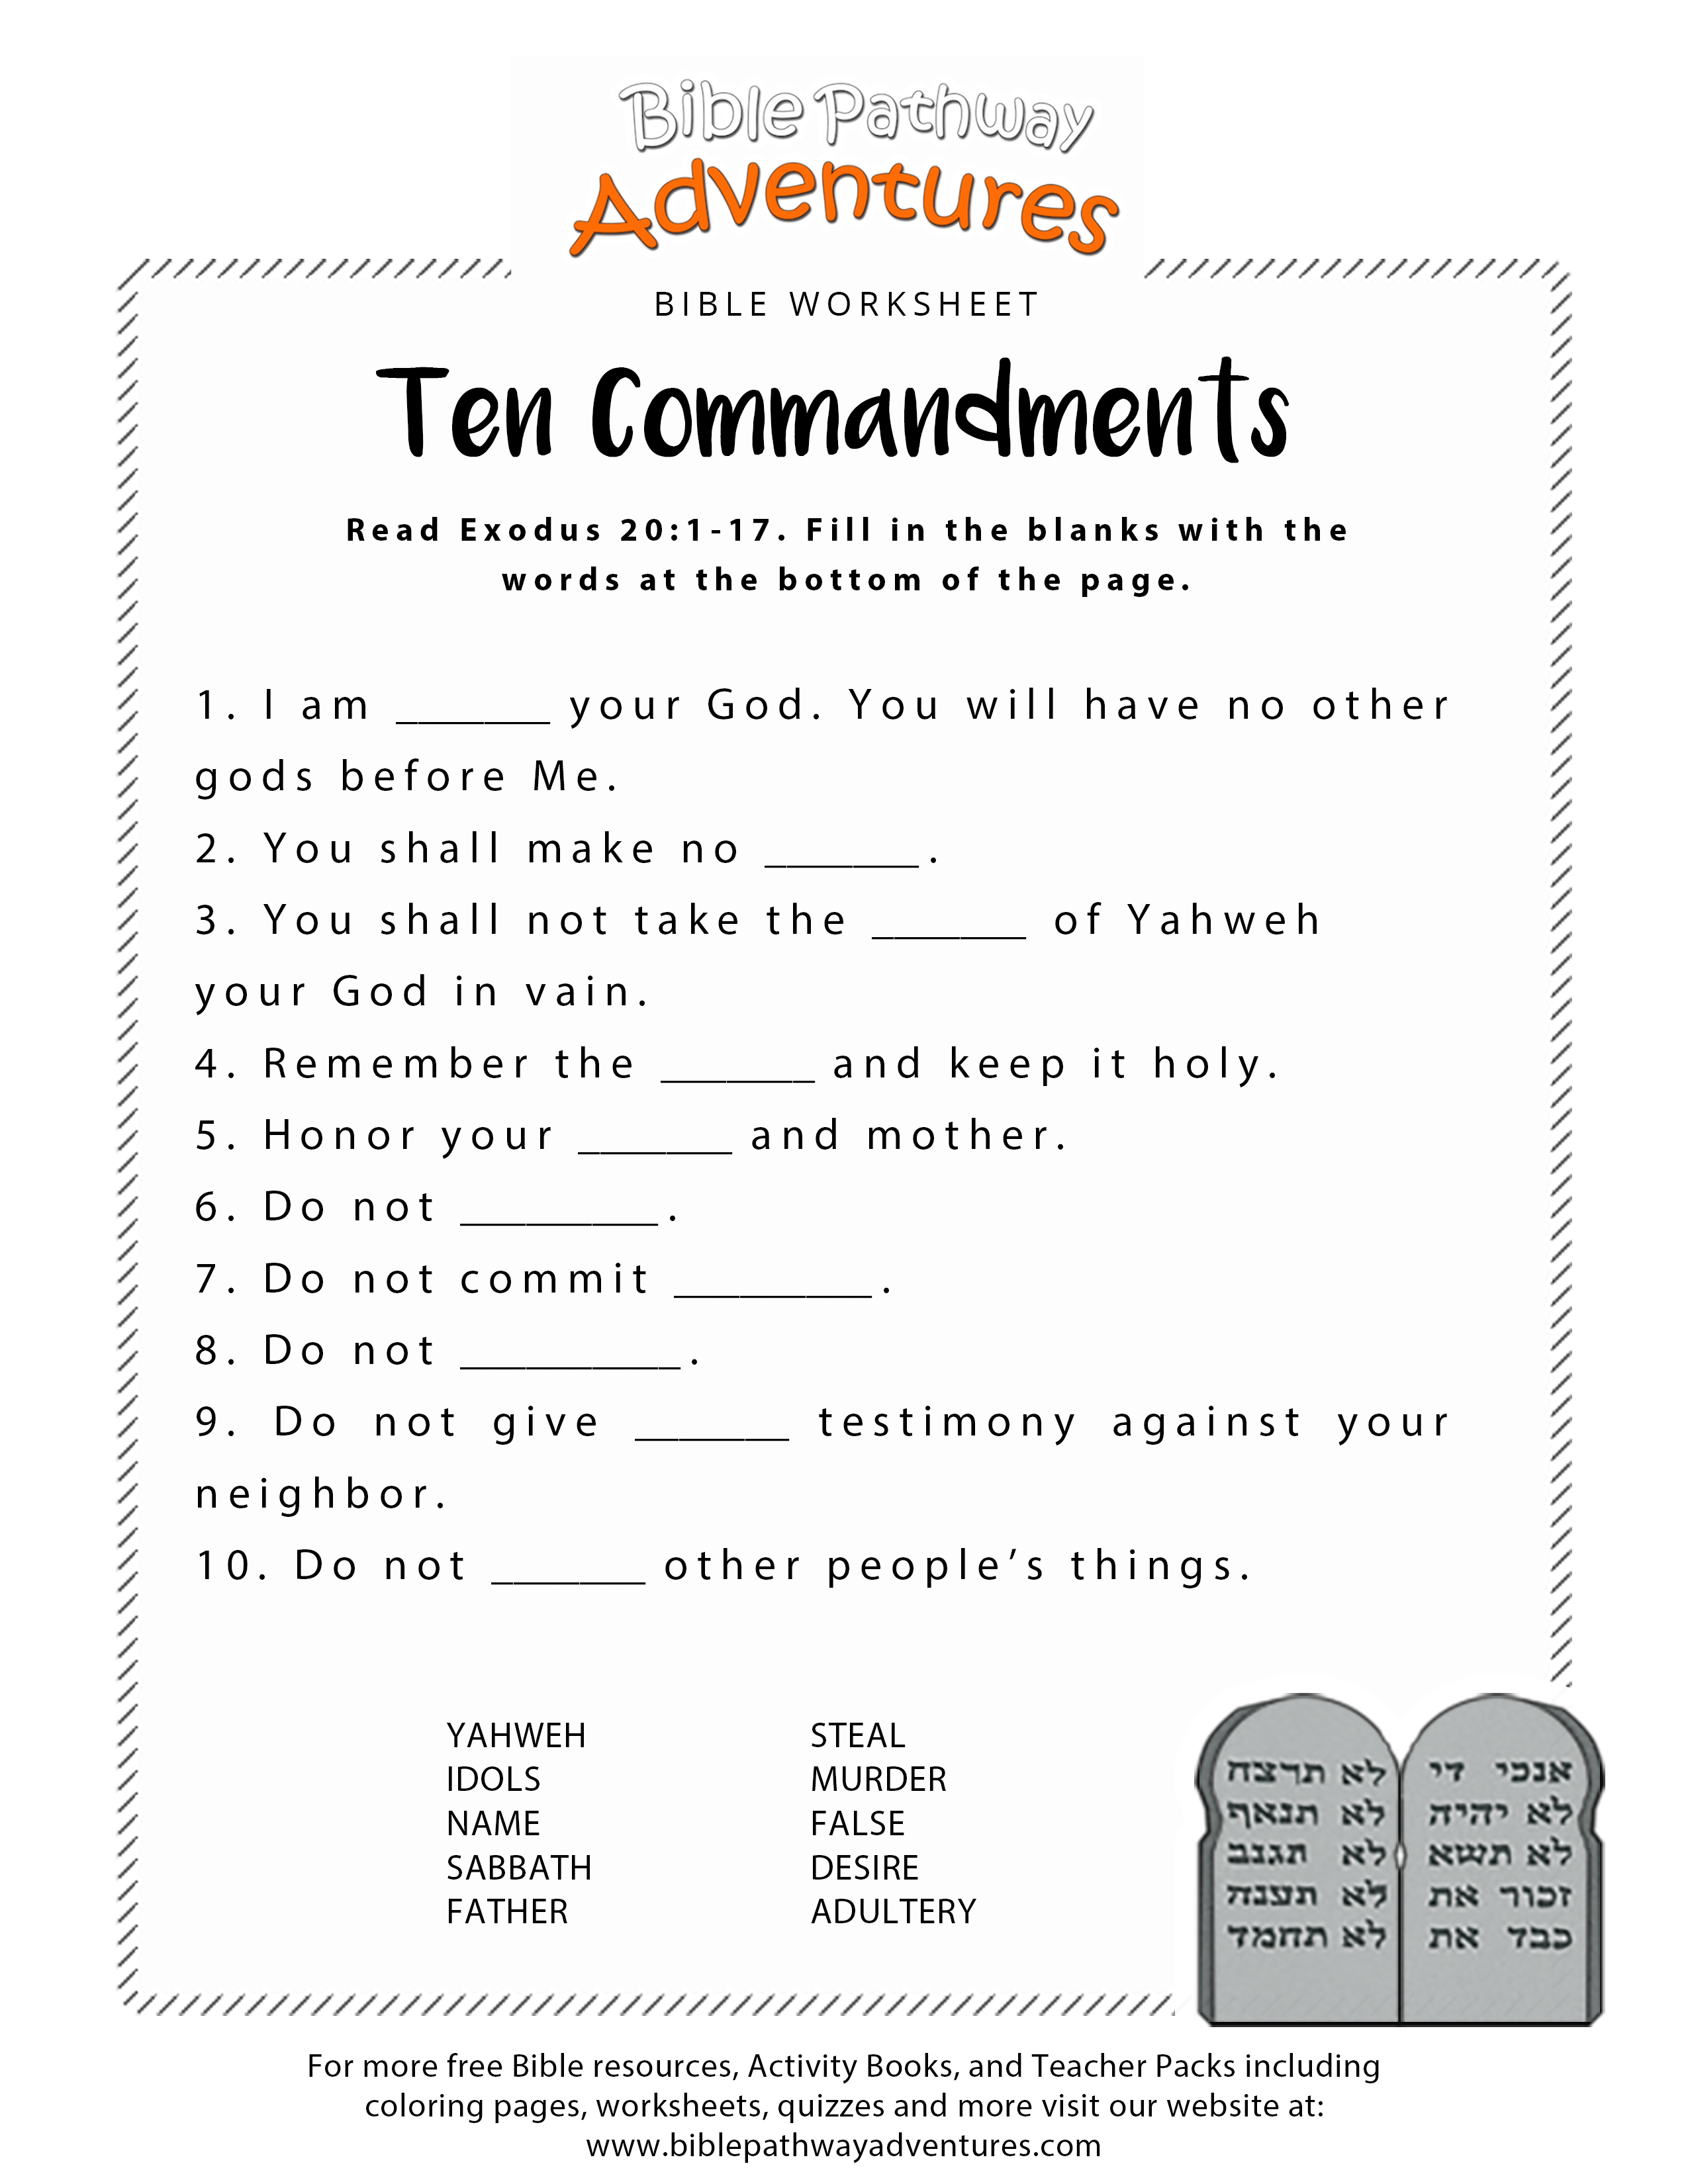 Ten Commandments Worksheet For Kids - Free Printable Children&amp;amp;#039;s Bible Lessons Worksheets